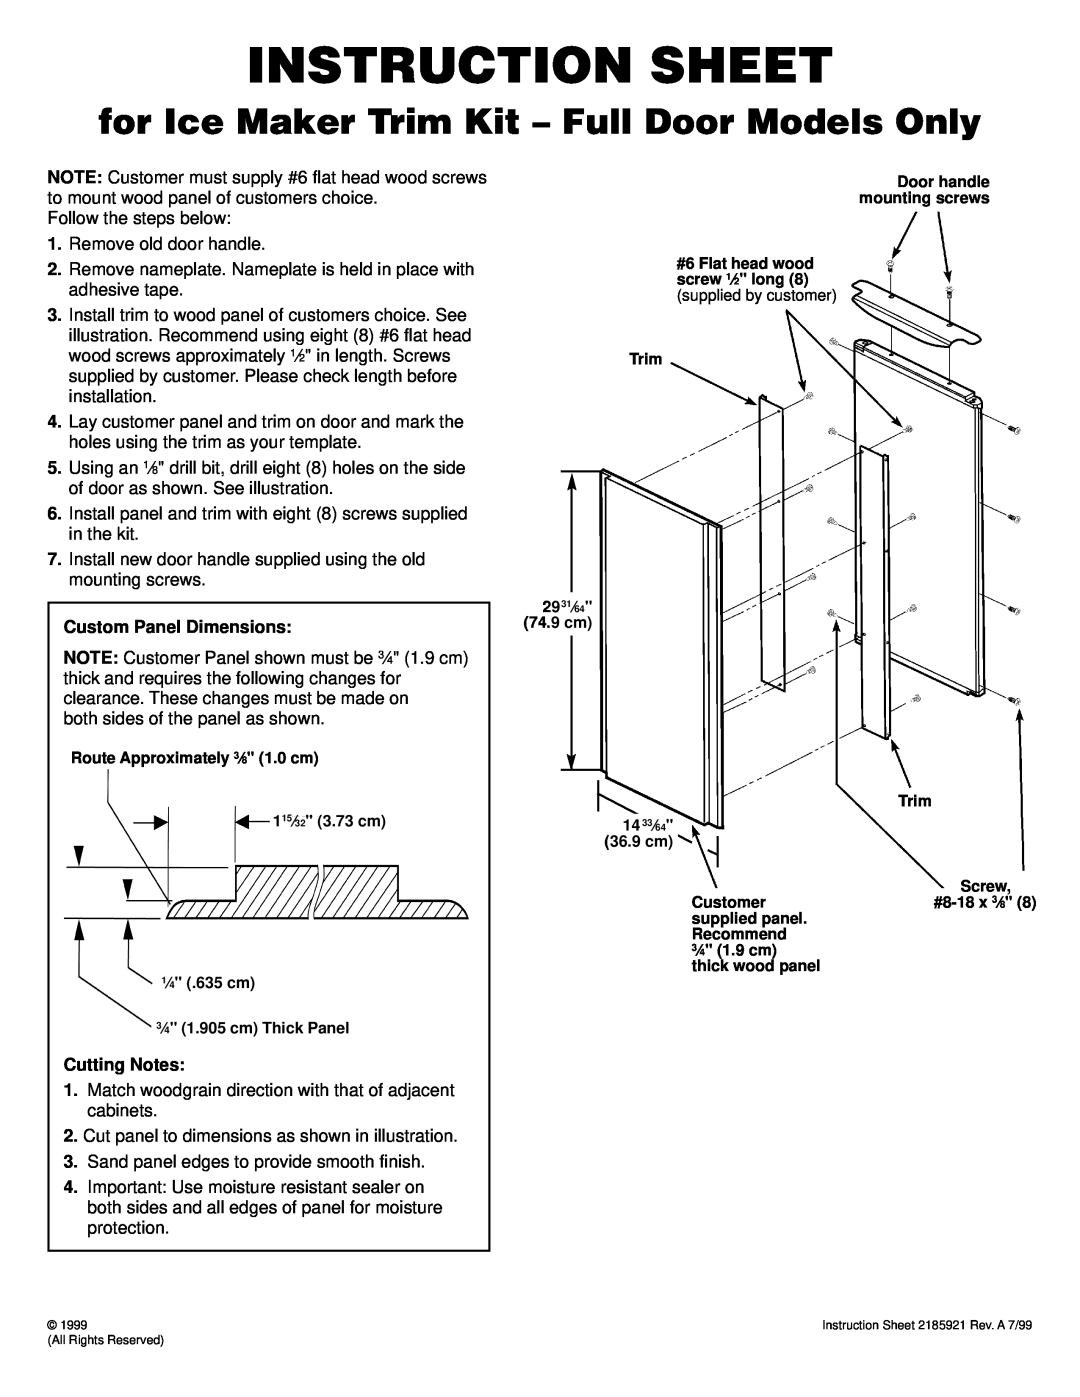 Whirlpool GI15NFLTS instruction sheet Instruction Sheet, for Ice Maker Trim Kit - Full Door Models Only, Cutting Notes 